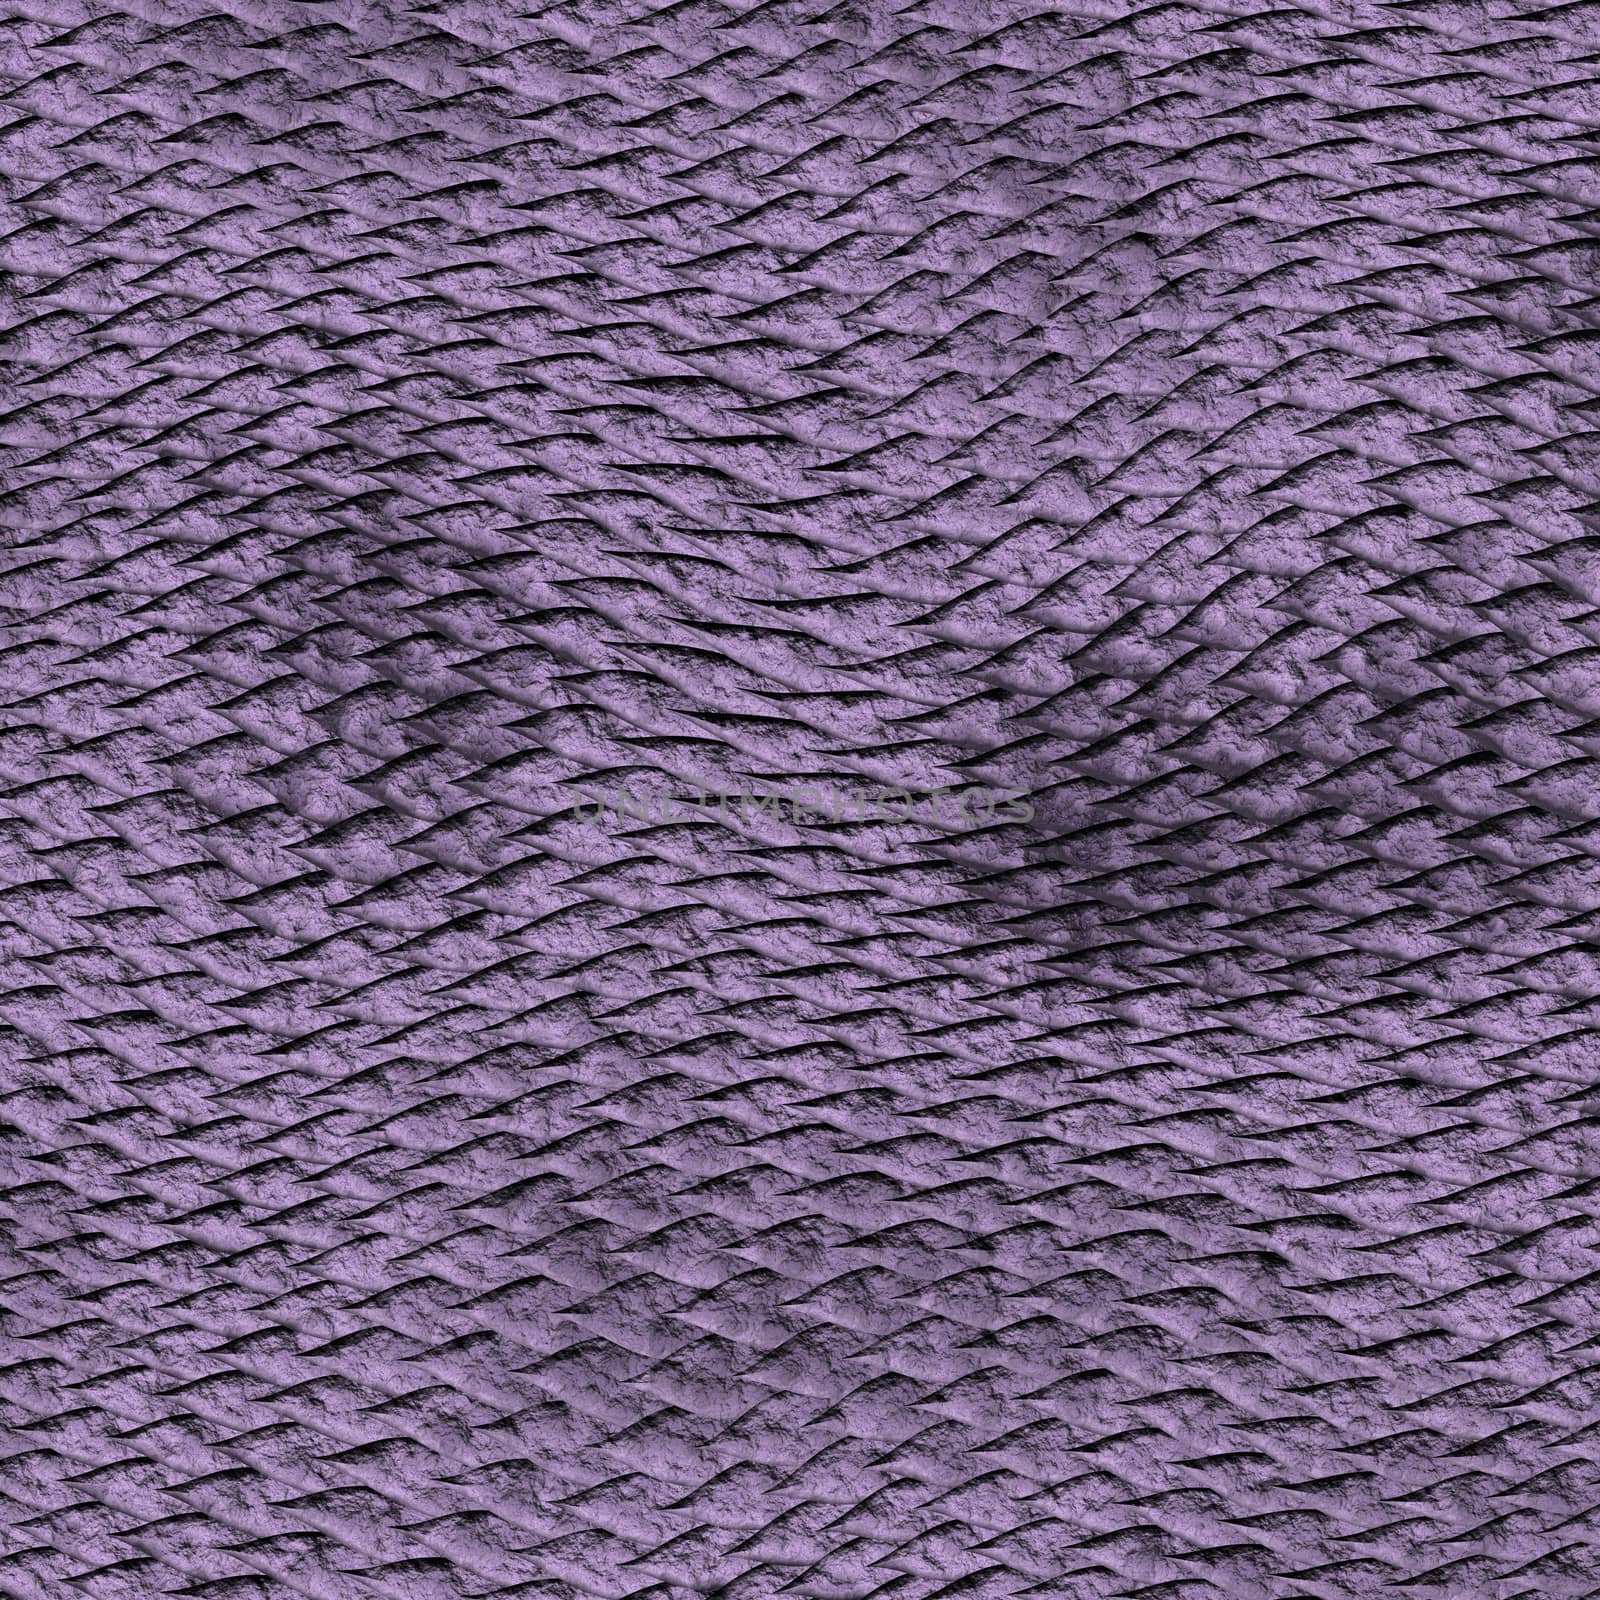 Purple dragon skin texture by sfinks